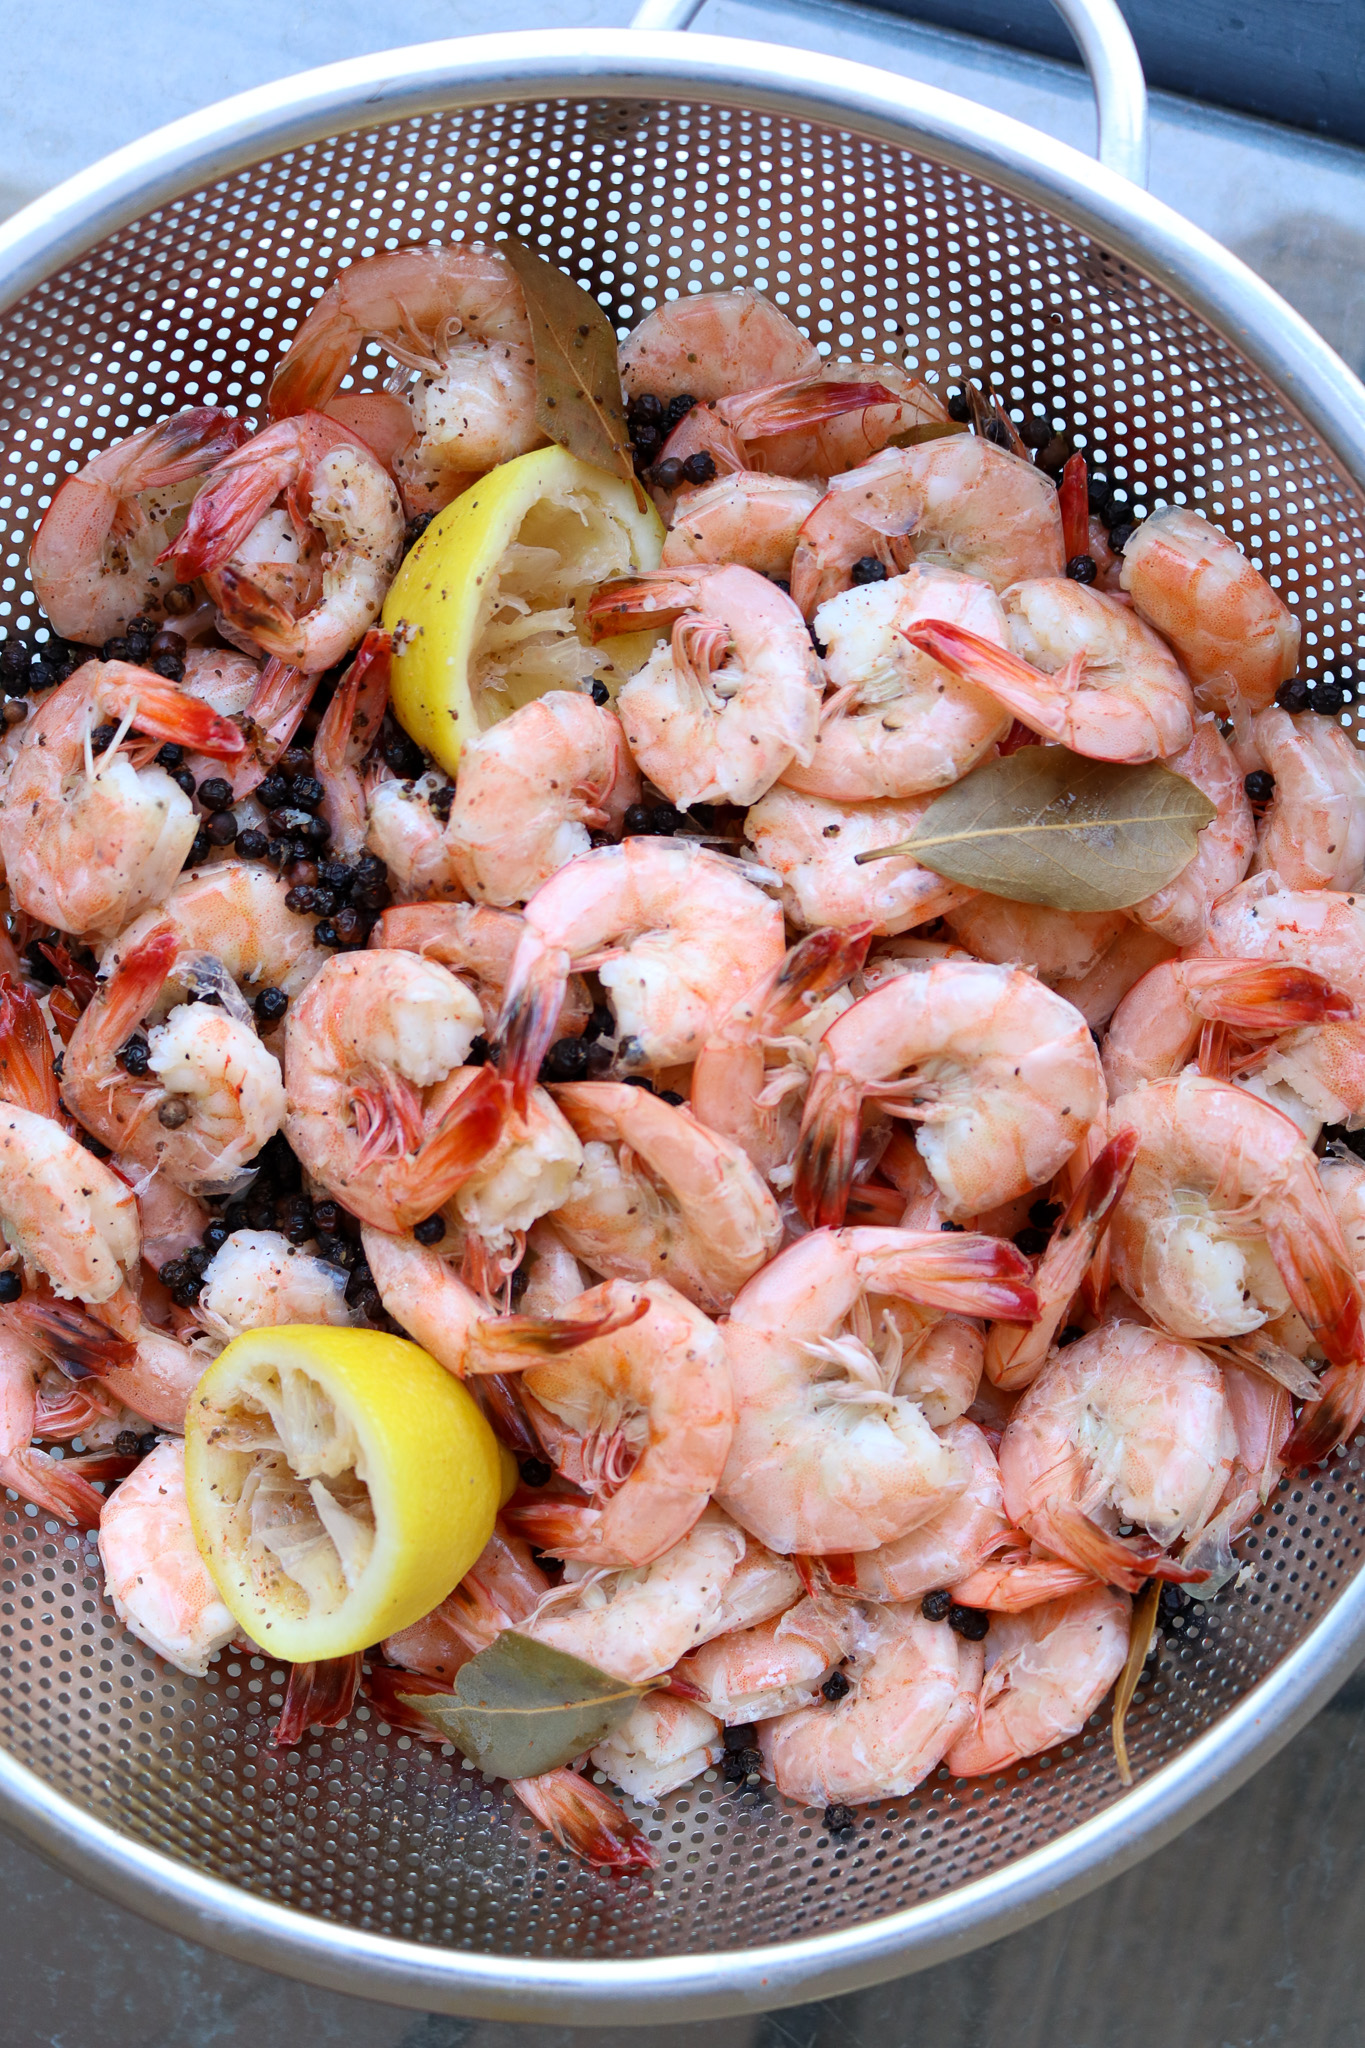 A pan of boiled shrimp with lemons, bay leaves, and seasonings.